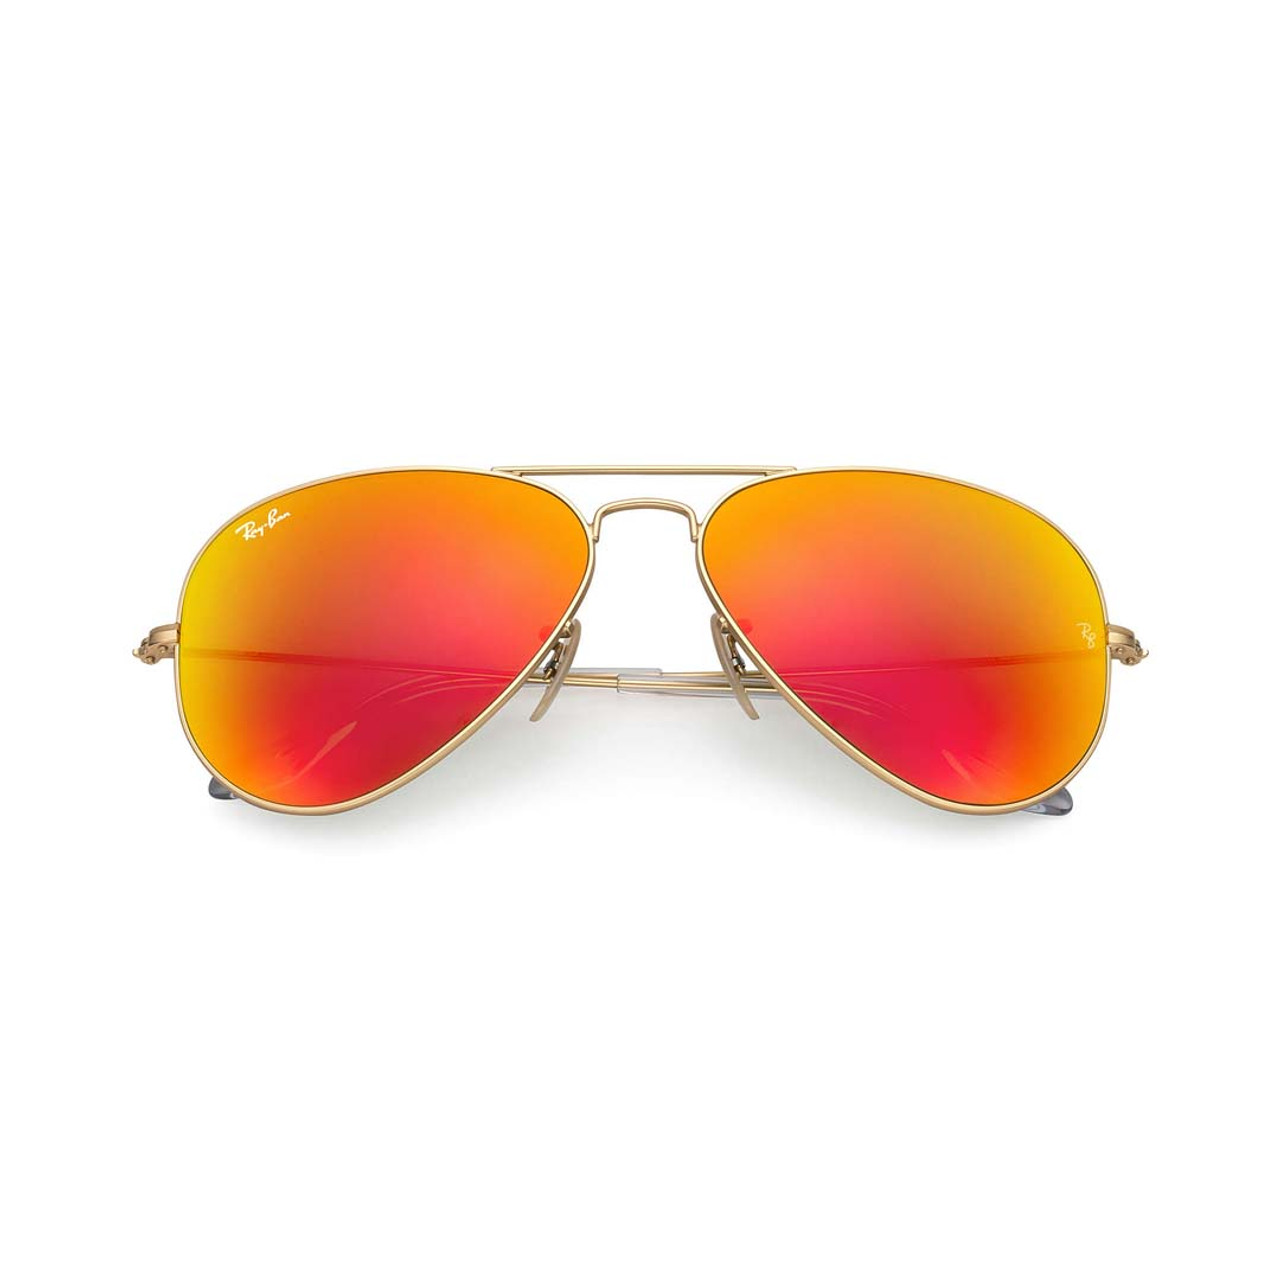 Ray-Ban Ray-Ban Aviator Flash Lenses Sunglasses - Gold/Orange $ 188 |  TYLER'S